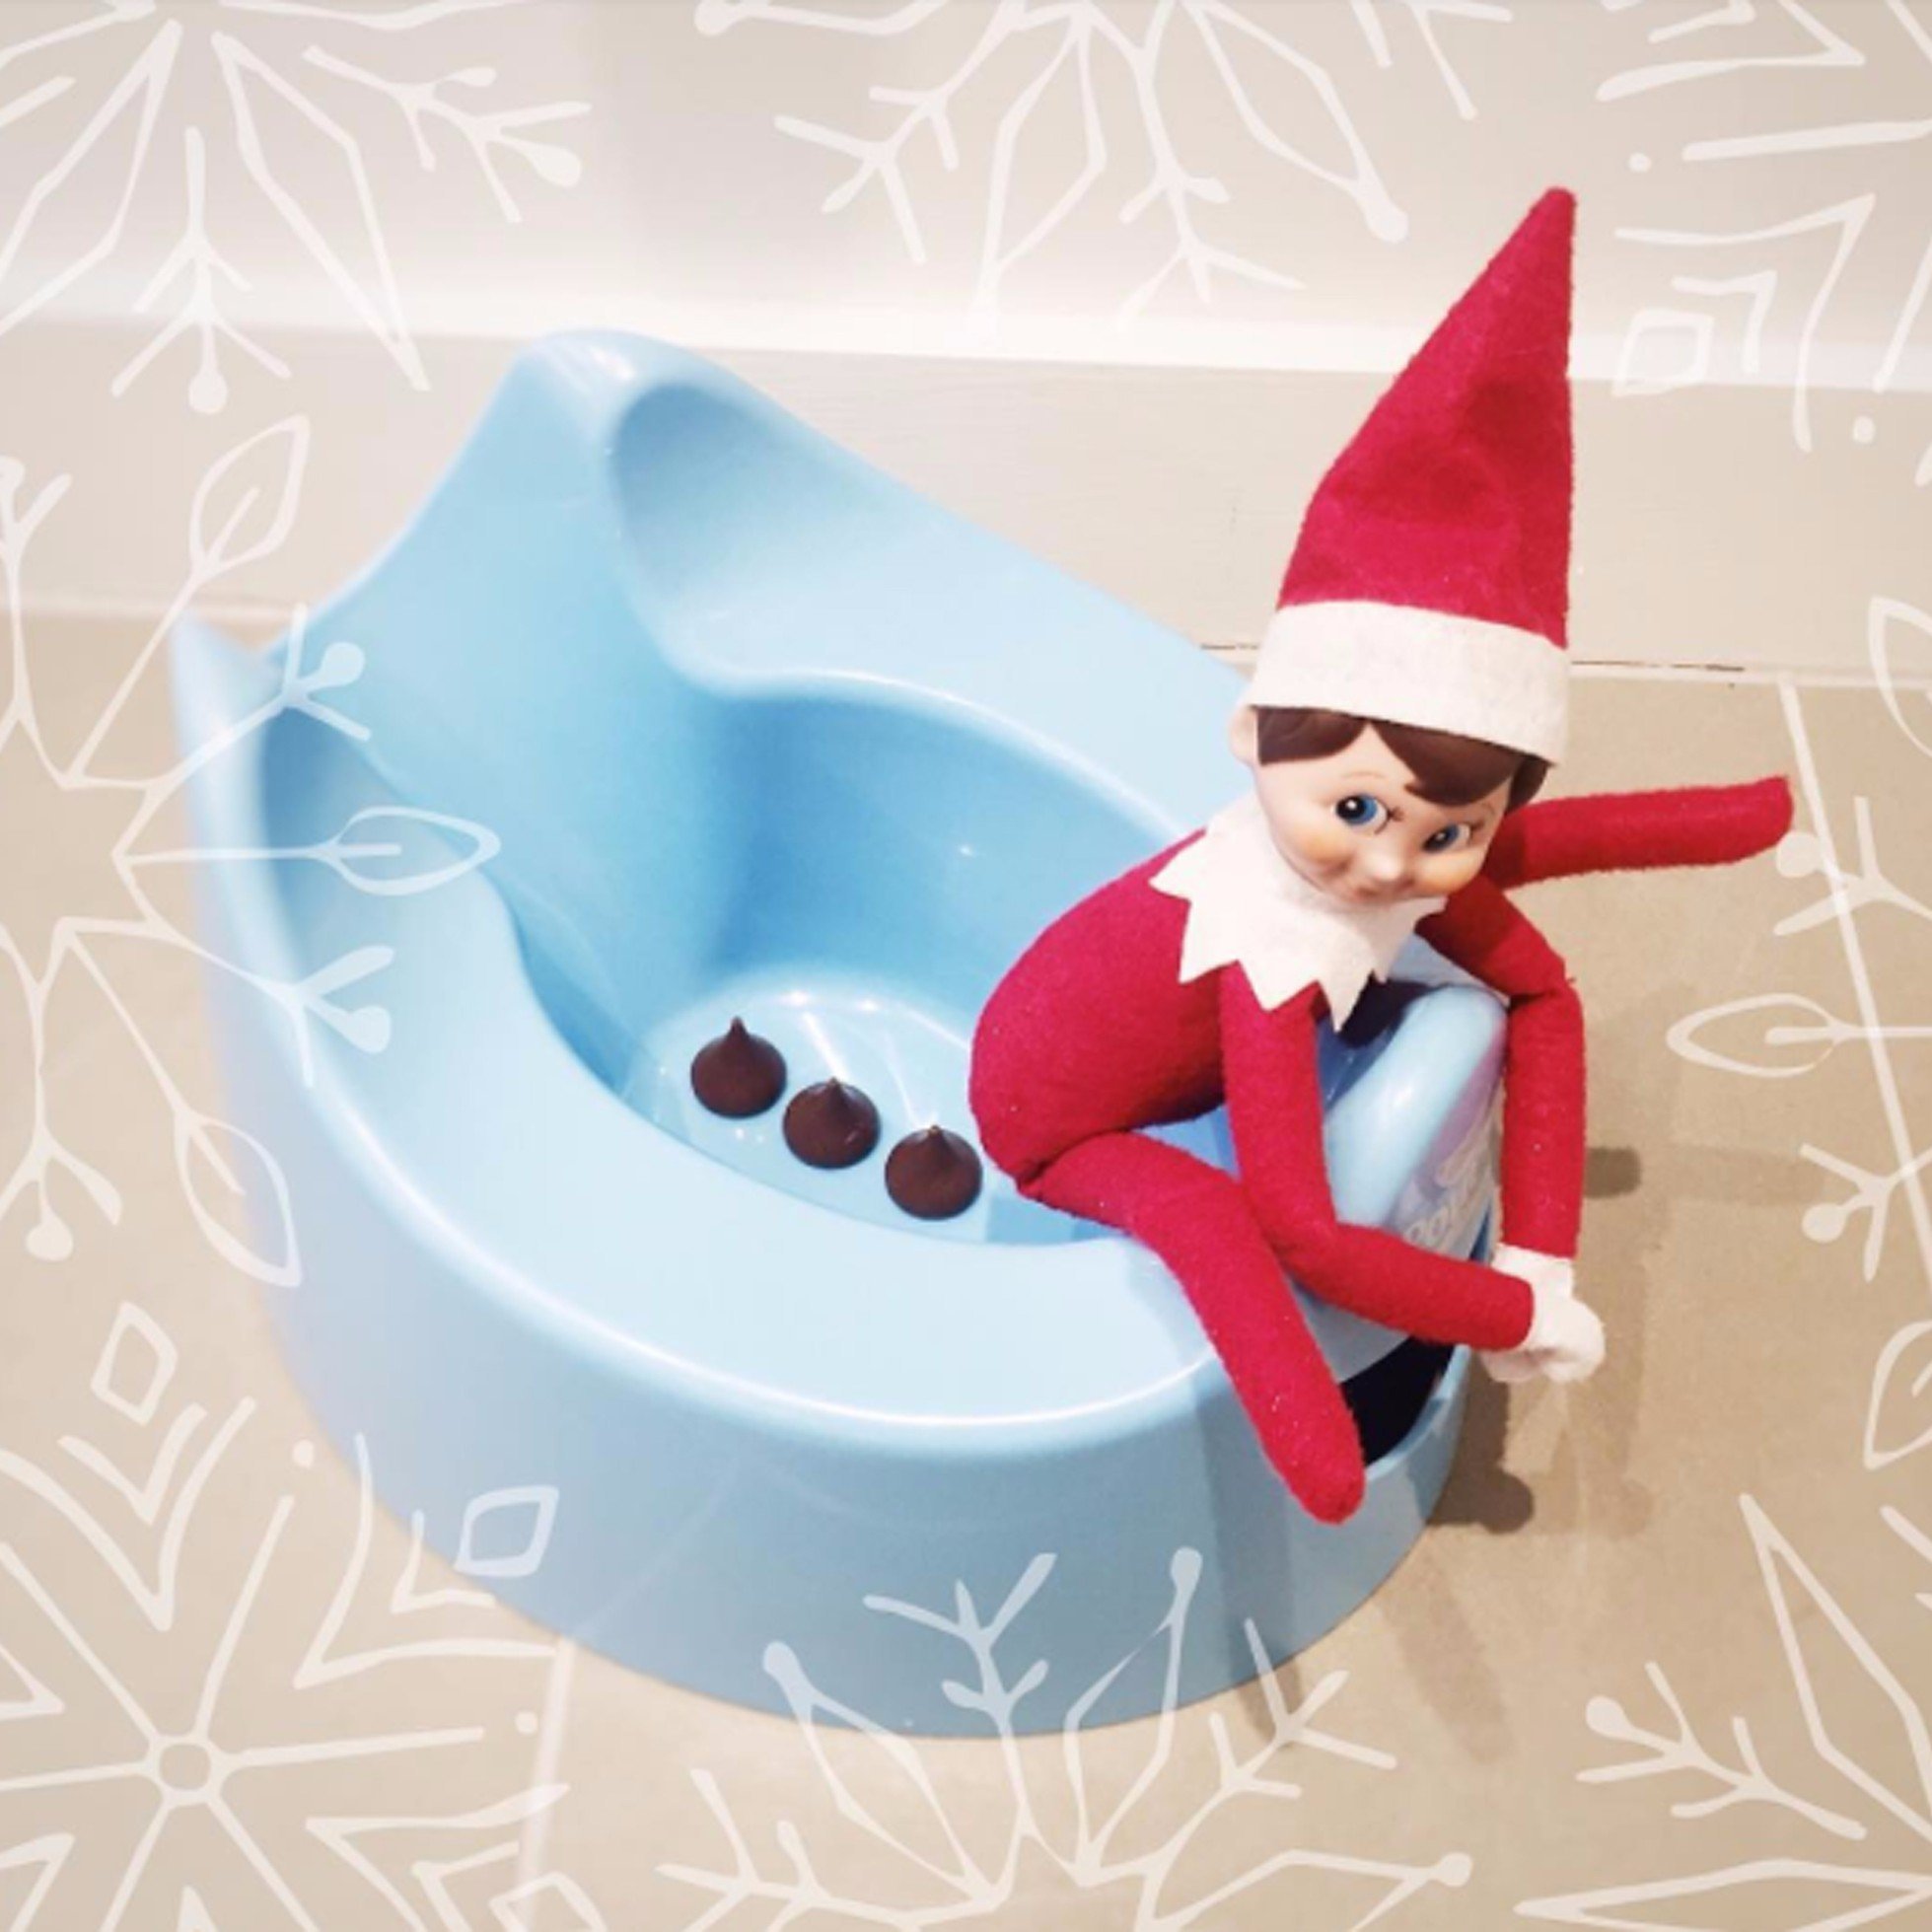 10 Most Popular Fun Ideas For Elf On The Shelf funny elf on the shelf ideas popsugar smart living uk 2 2022